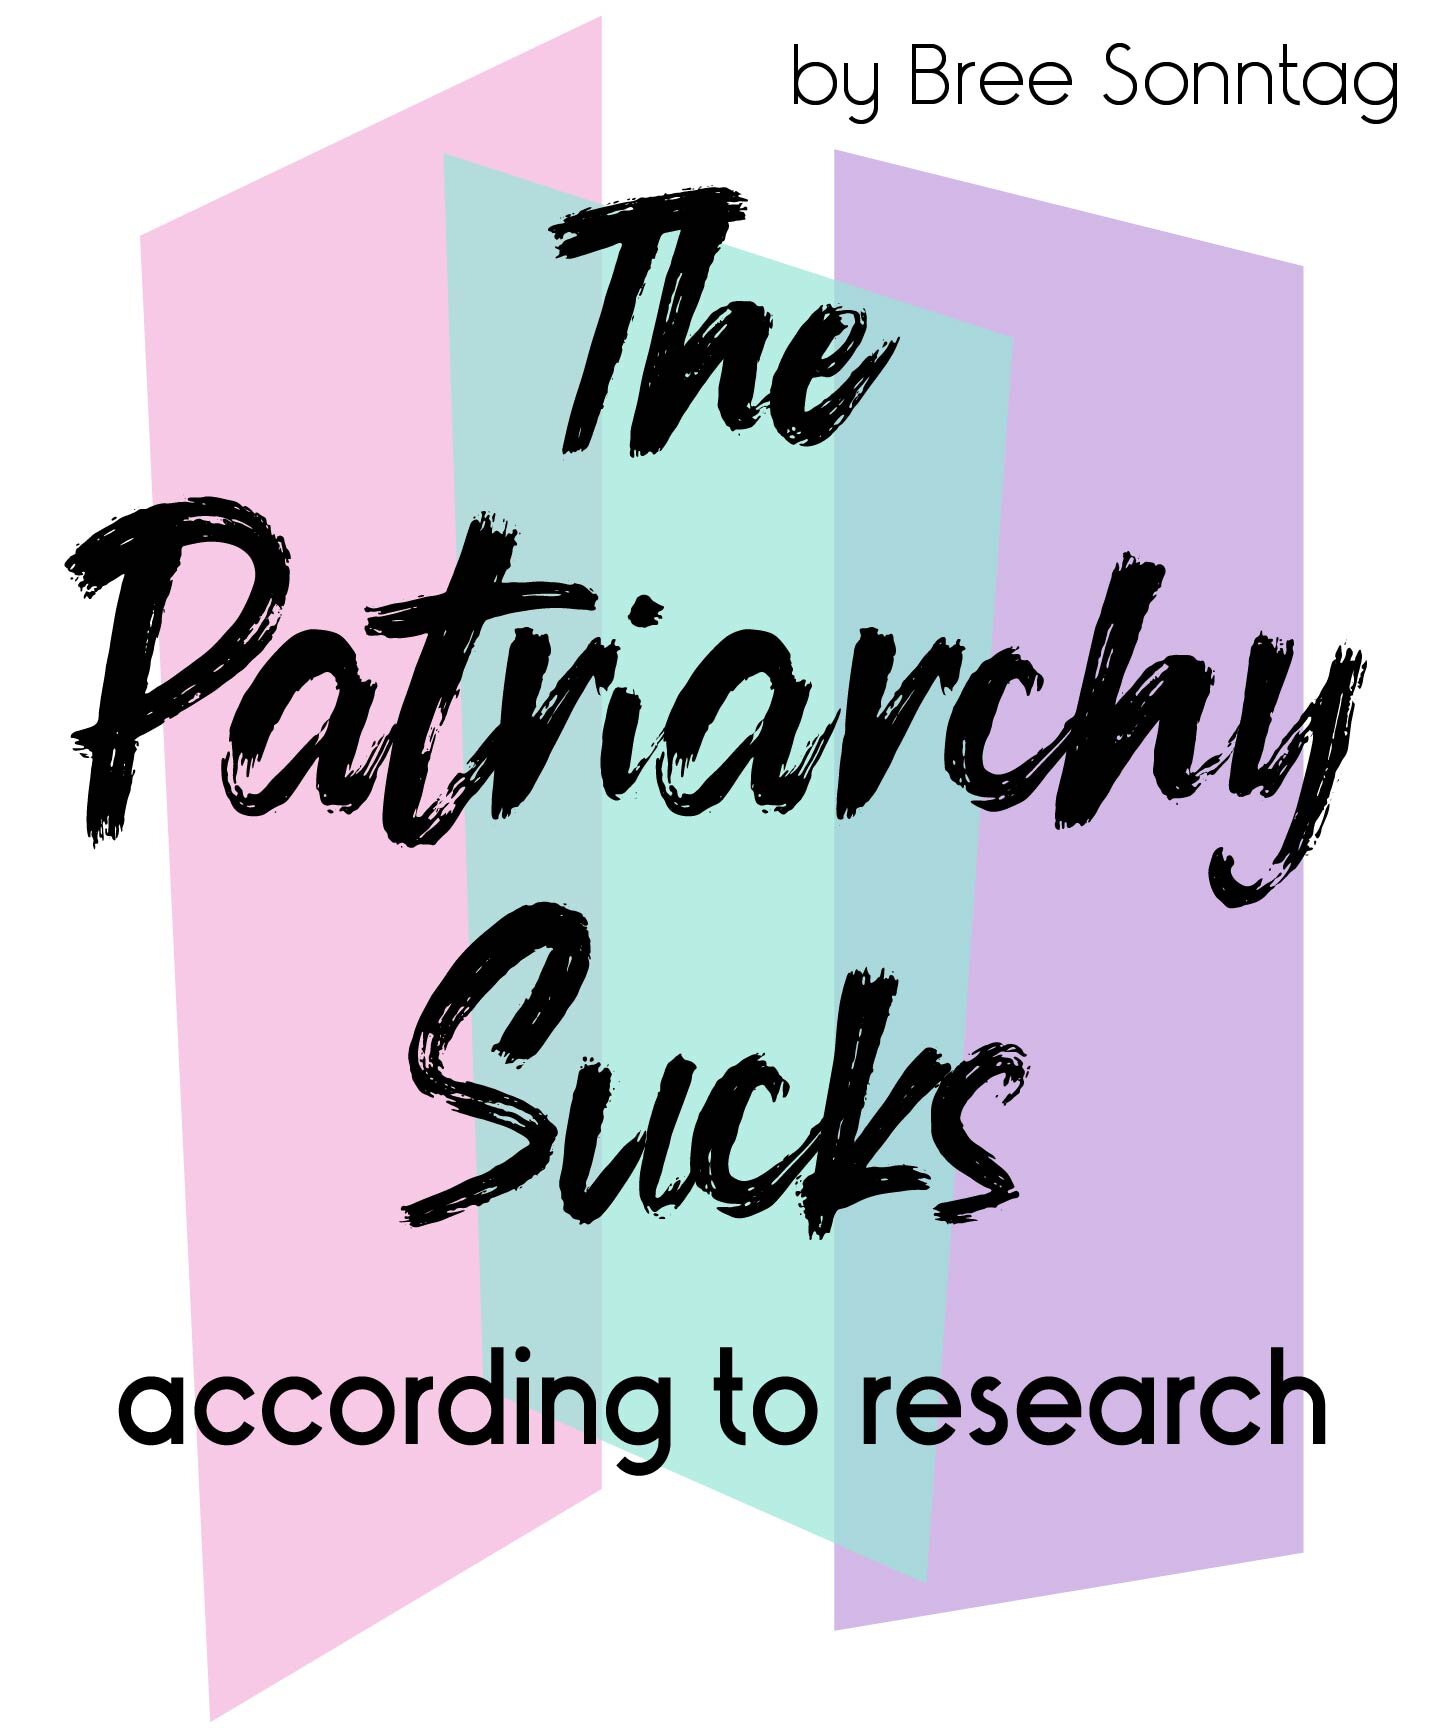 patriarchy-01.jpg